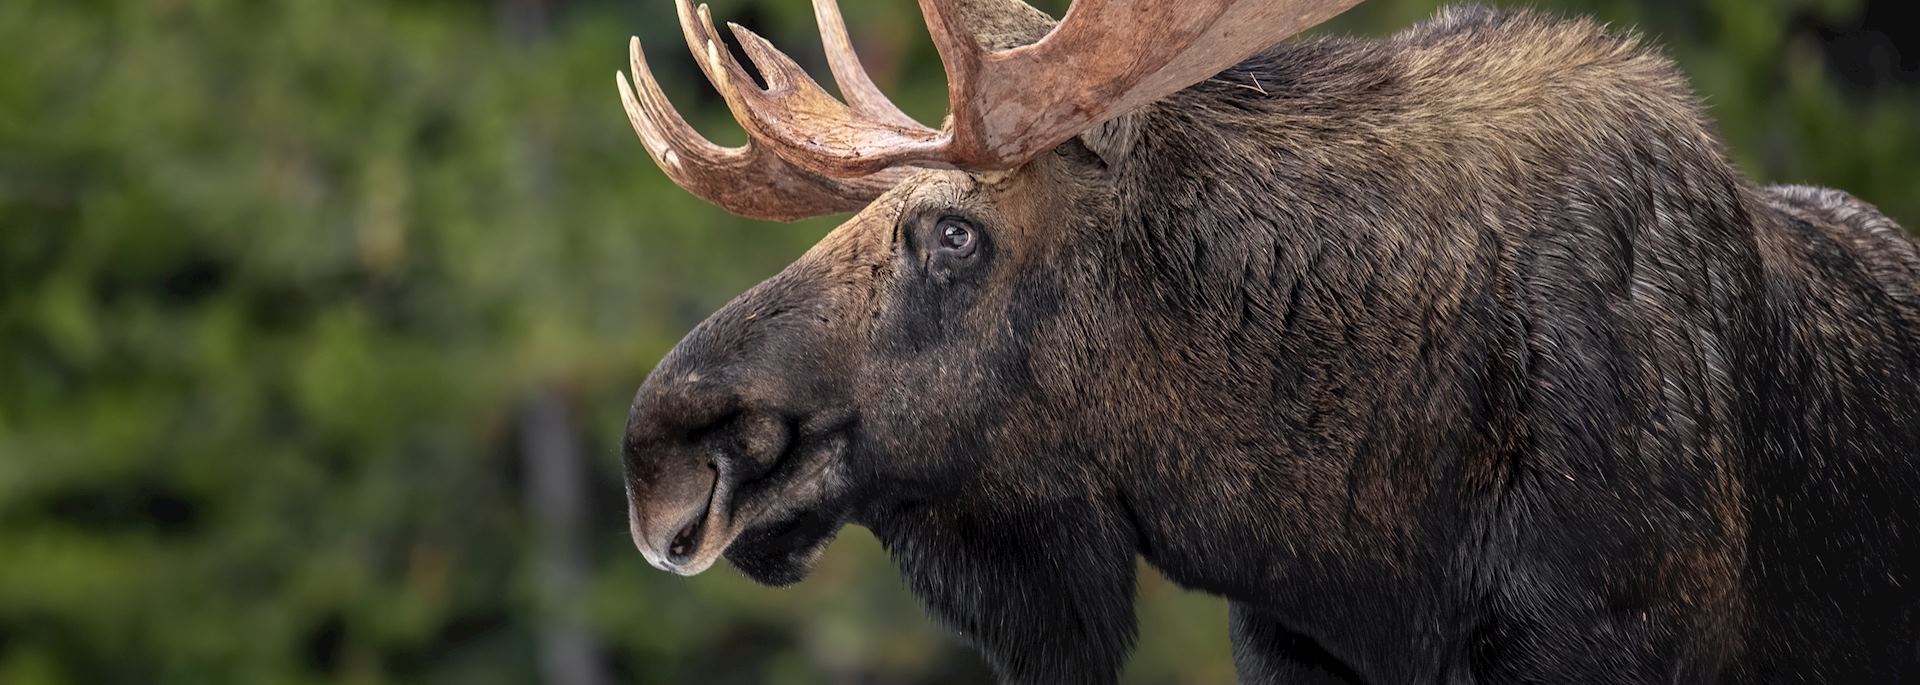 Moose in Wood Buffalo National Park, Alberta